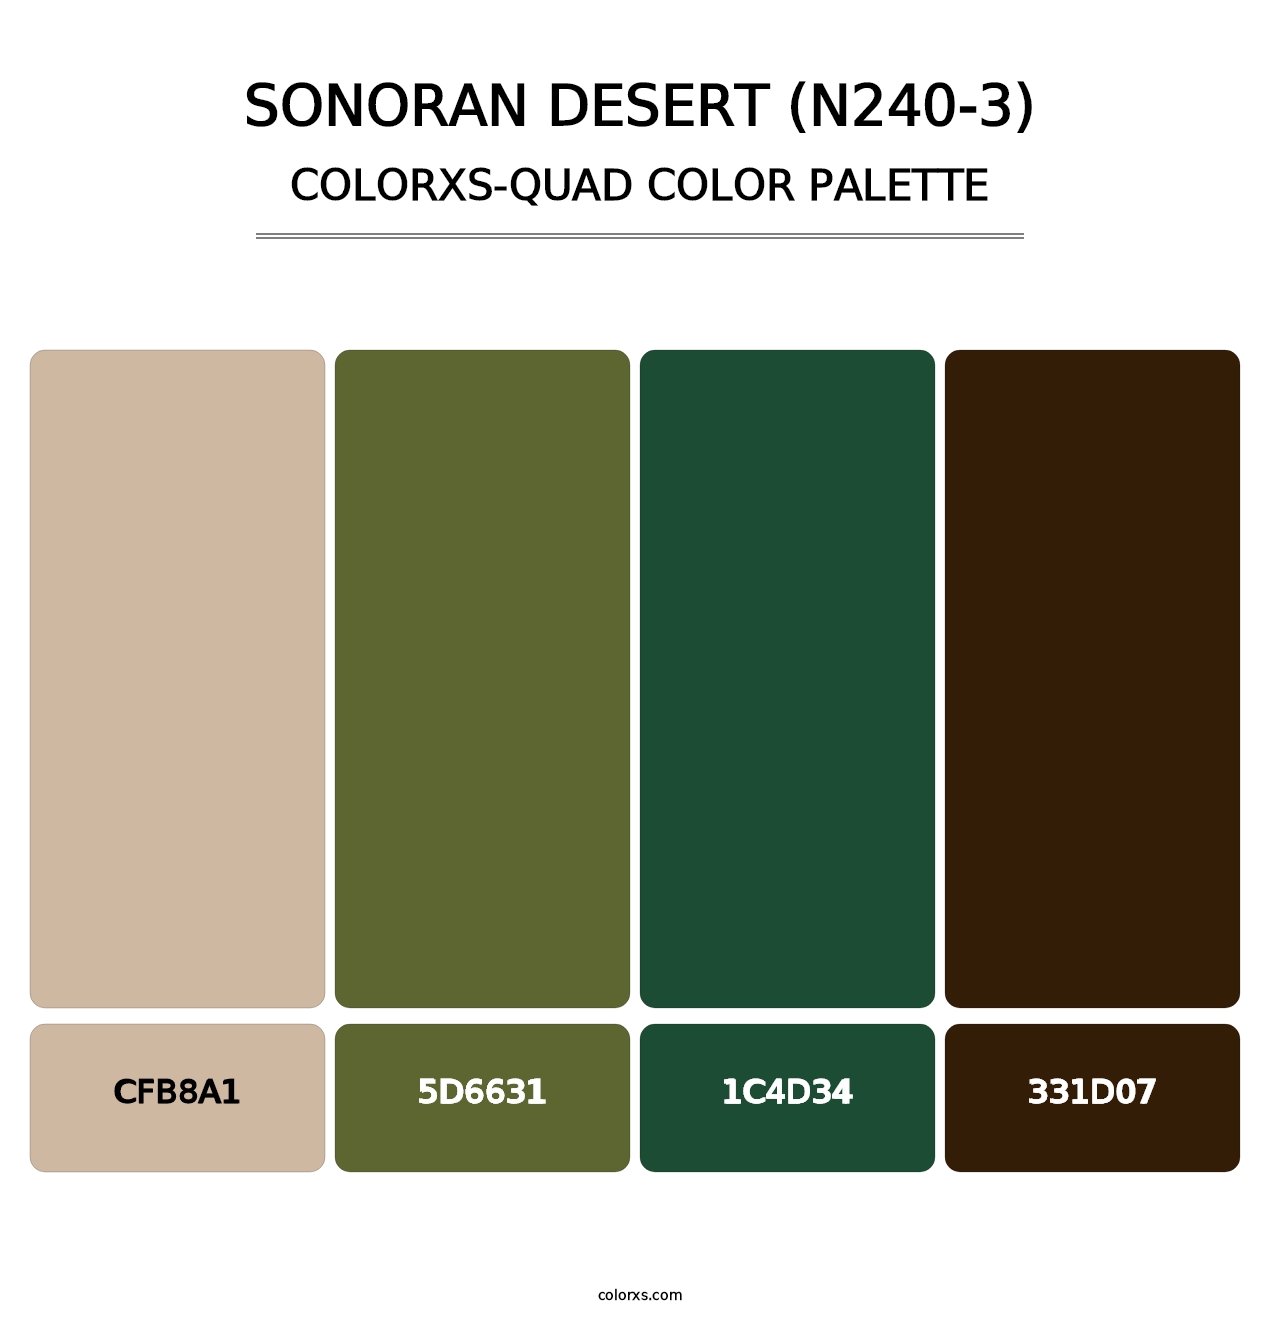 Sonoran Desert (N240-3) - Colorxs Quad Palette